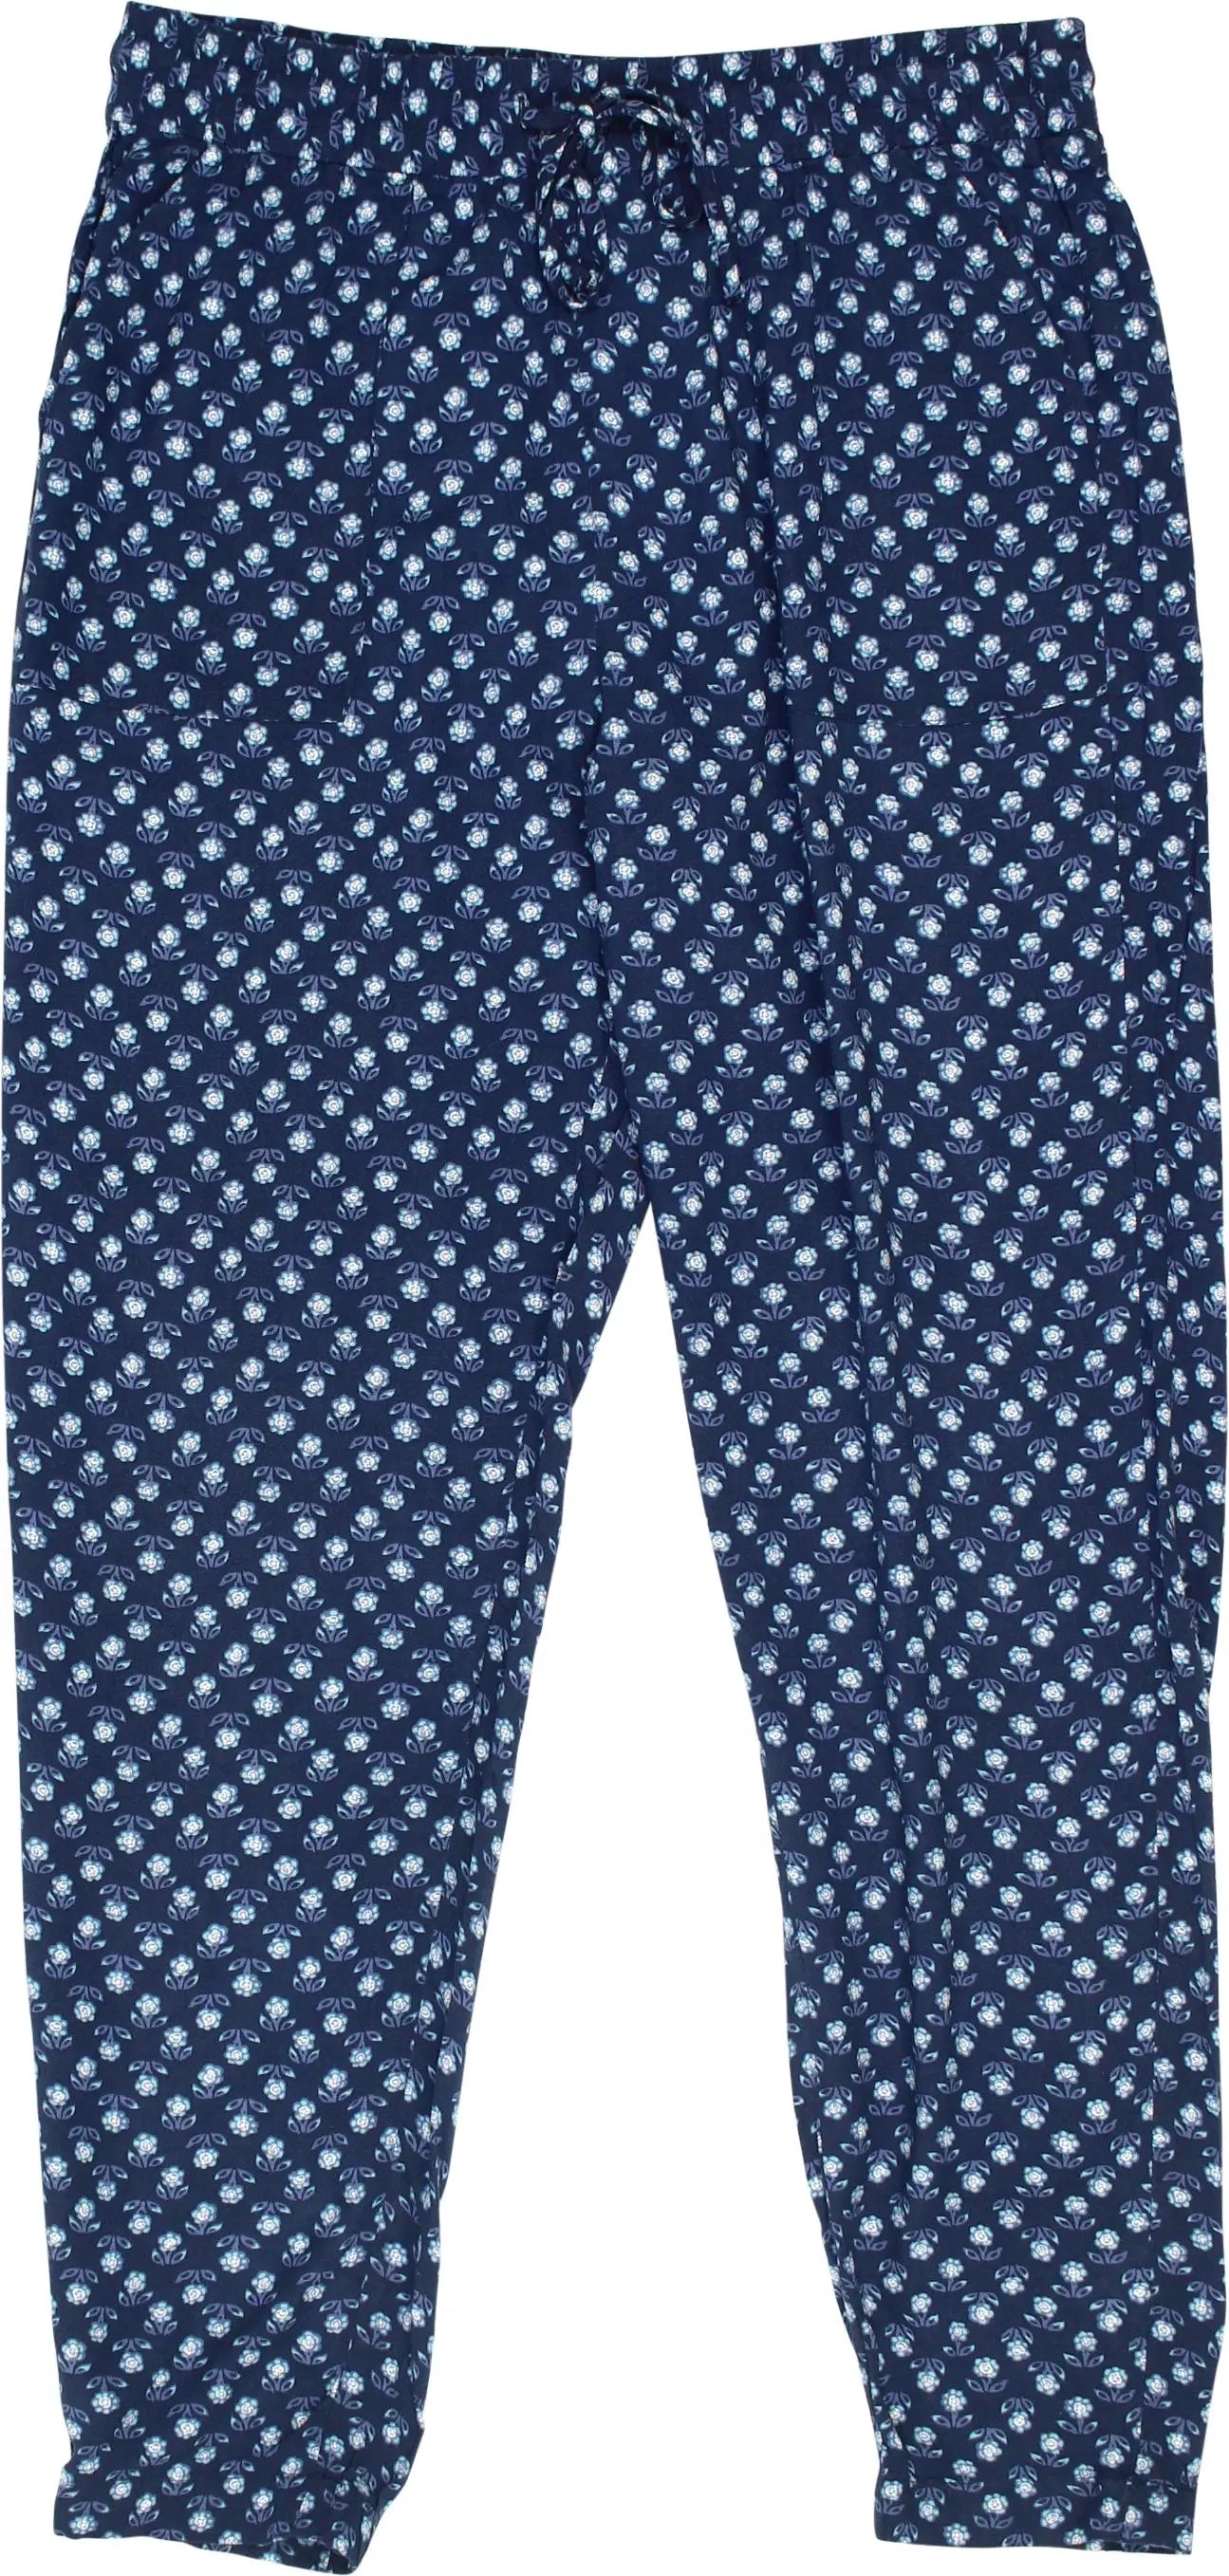 Lauren Conrad - Beach Pants- ThriftTale.com - Vintage and second handclothing